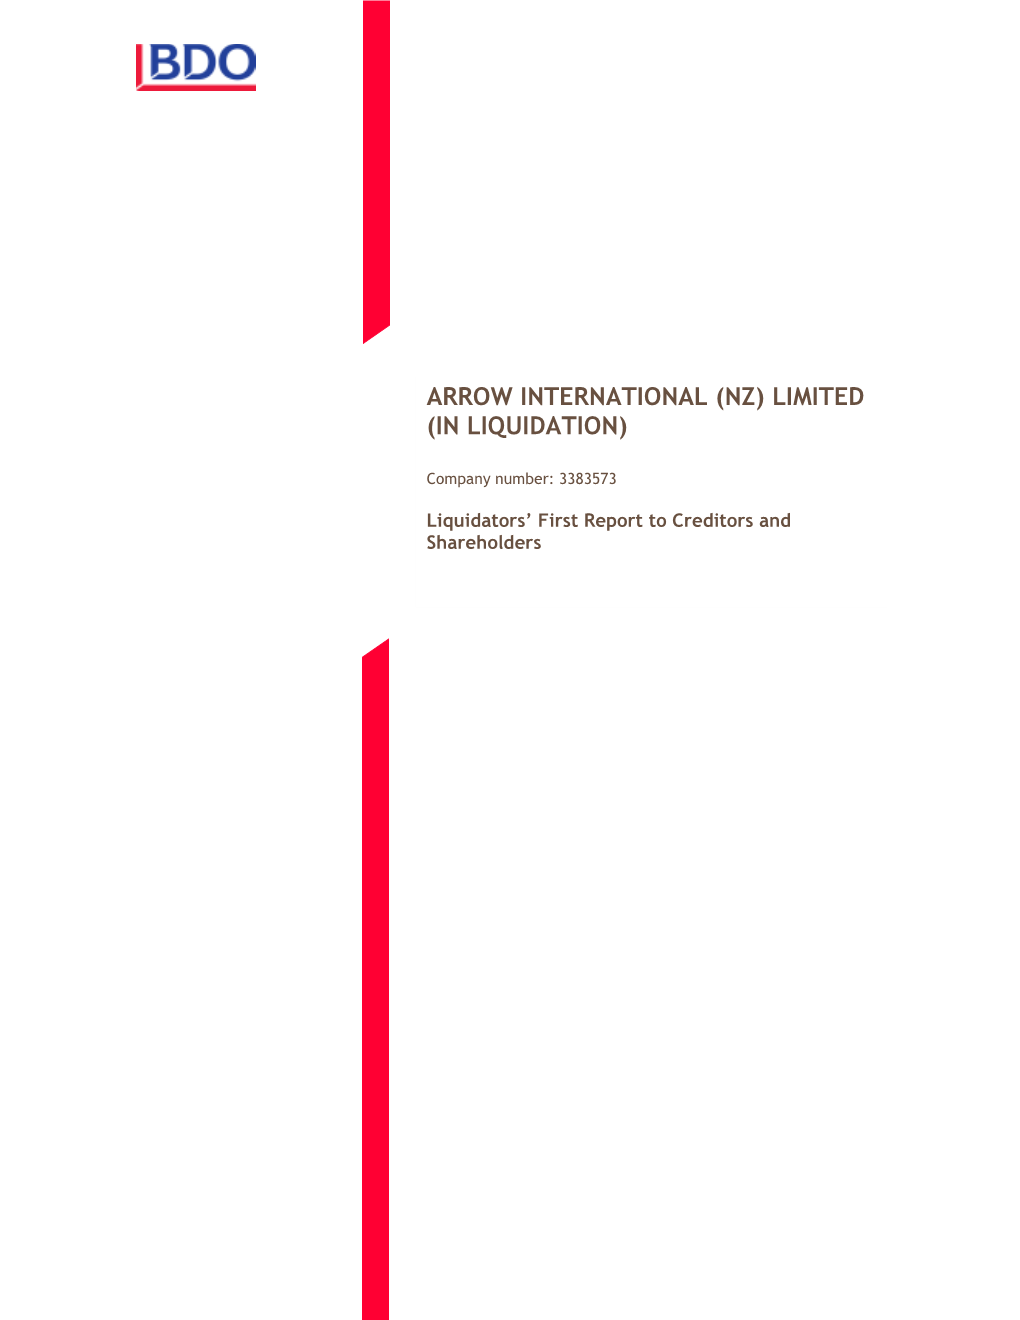 Arrow International (Nz) Limited (In Liquidation)